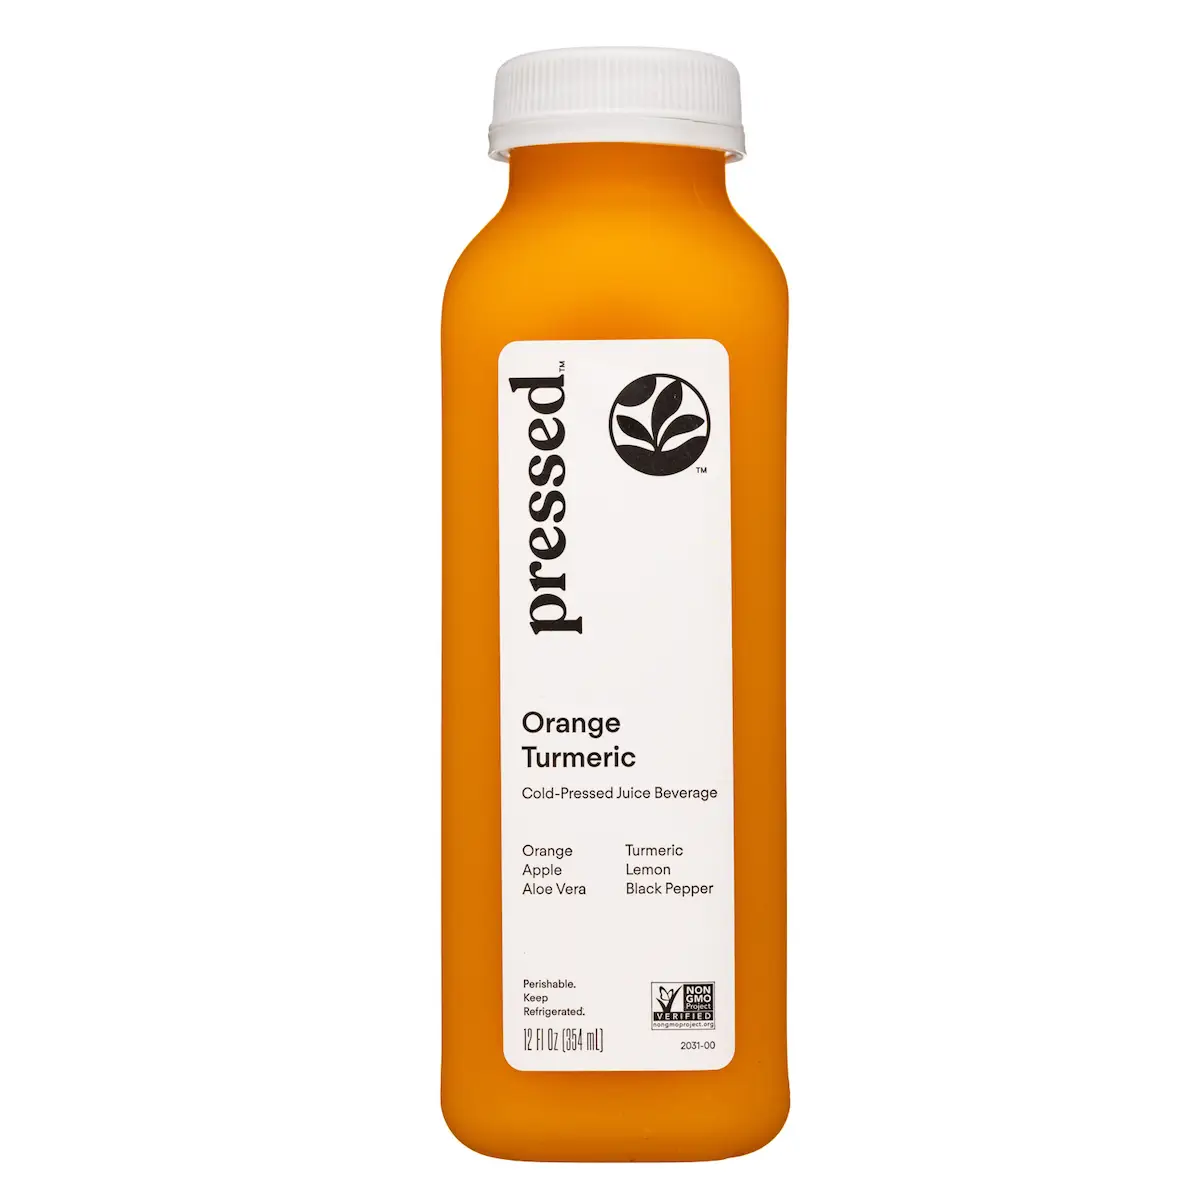 Orange Turmeric Juice Delivery